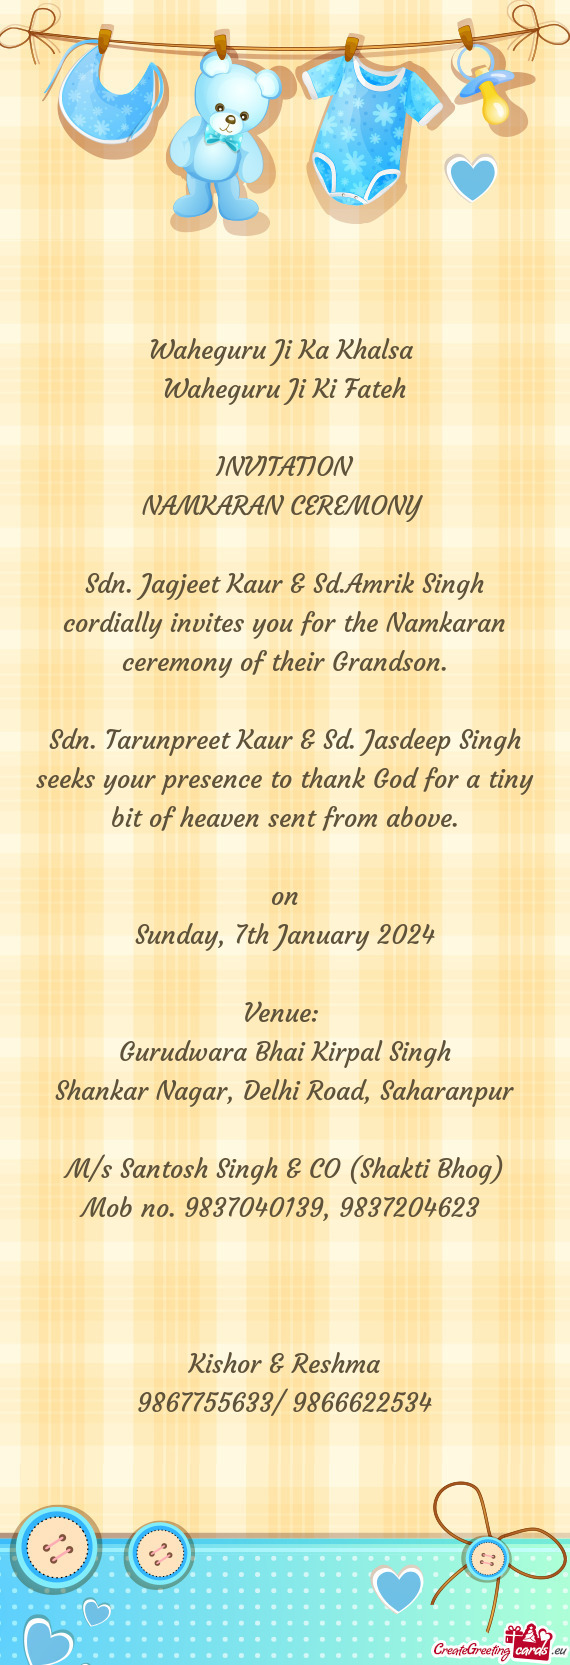 Sdn. Jagjeet Kaur & Sd.Amrik Singh cordially invites you for the Namkaran ceremony of their Grandson